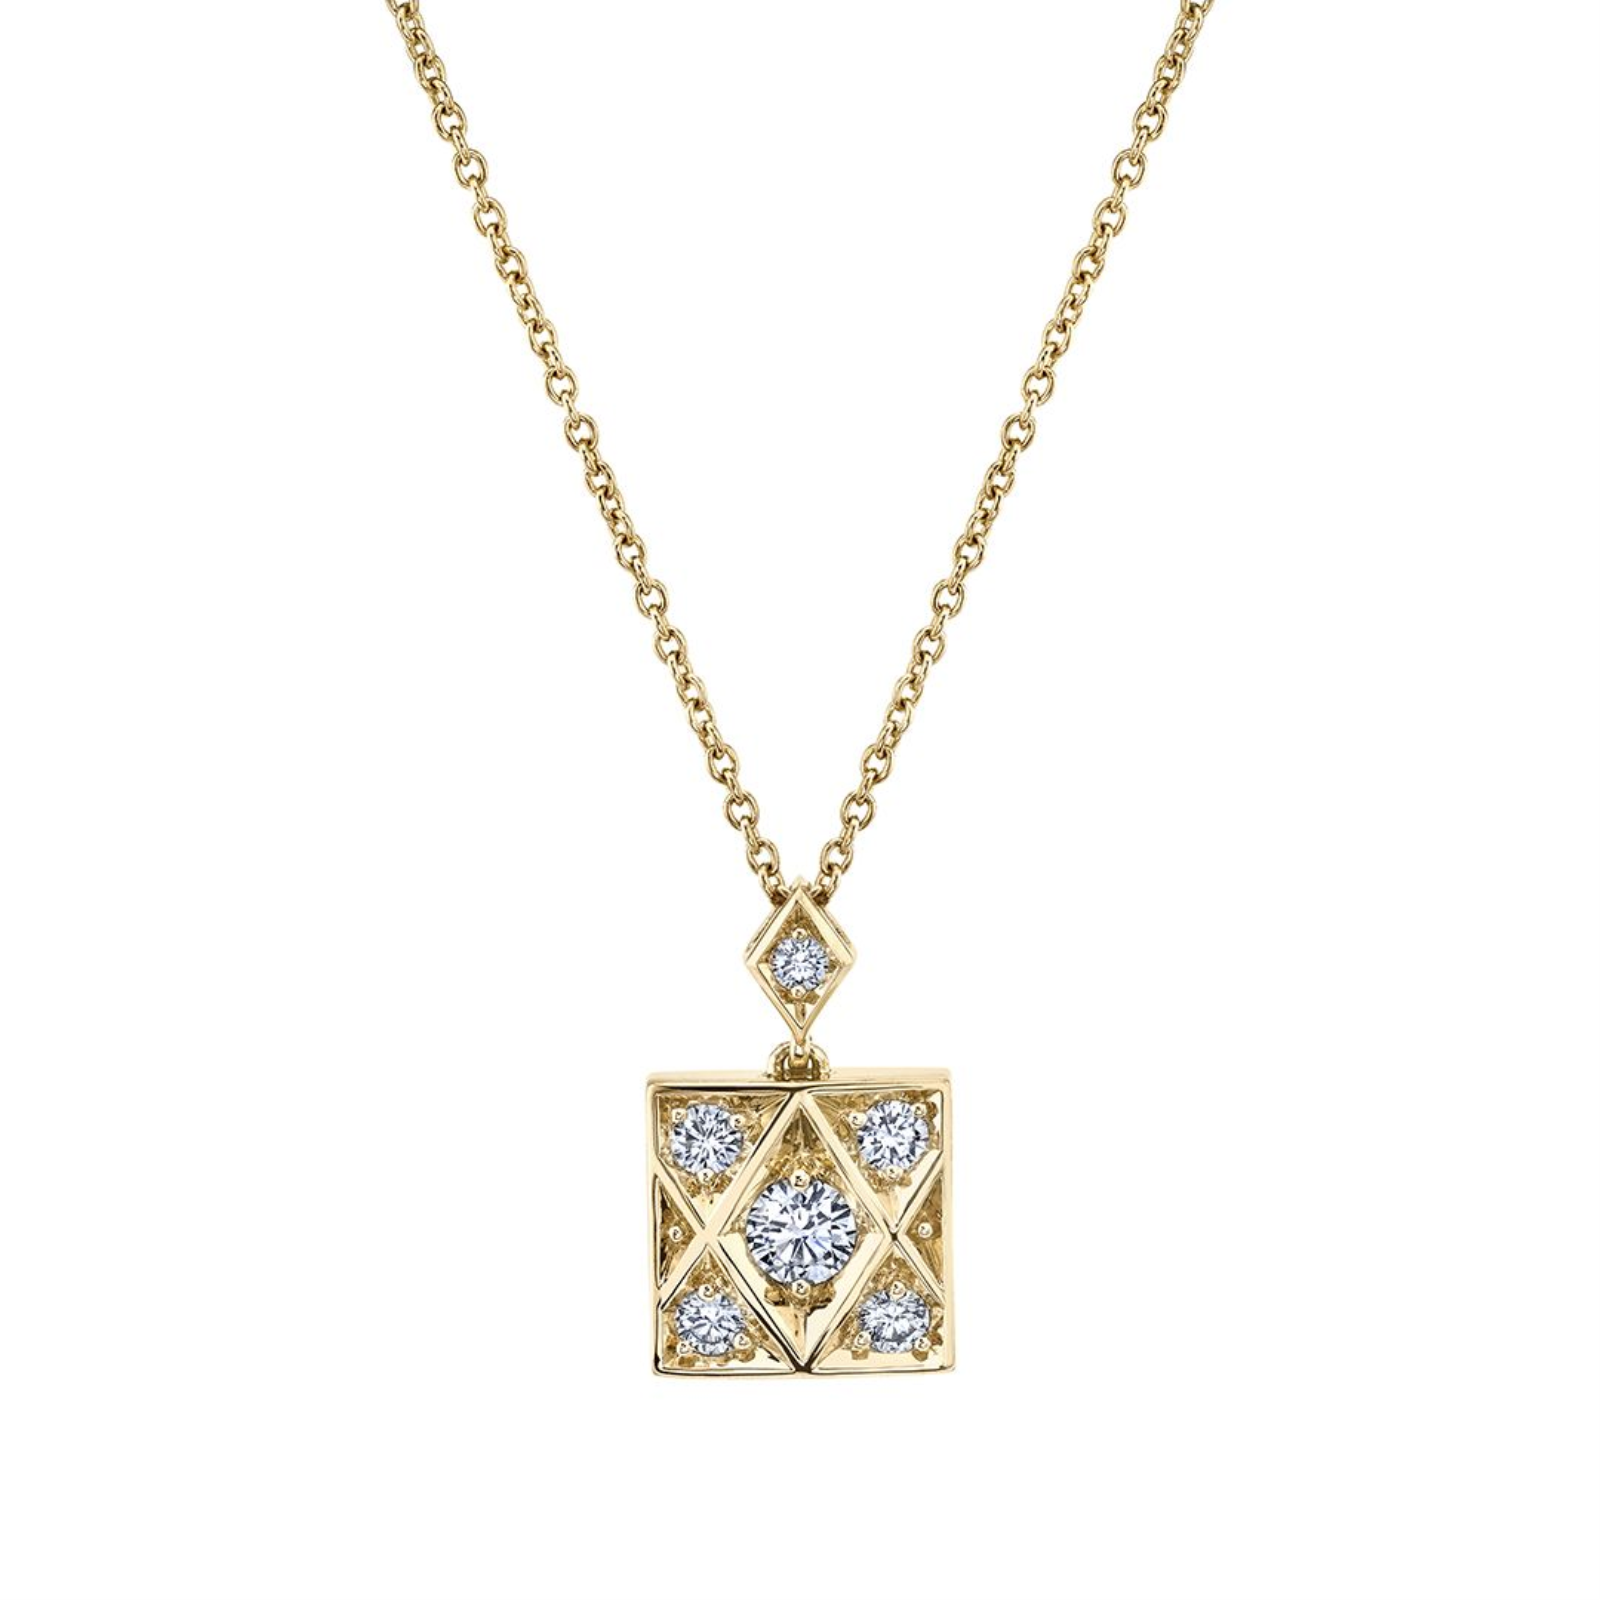 White Gold and Diamond Square Pendant Necklace